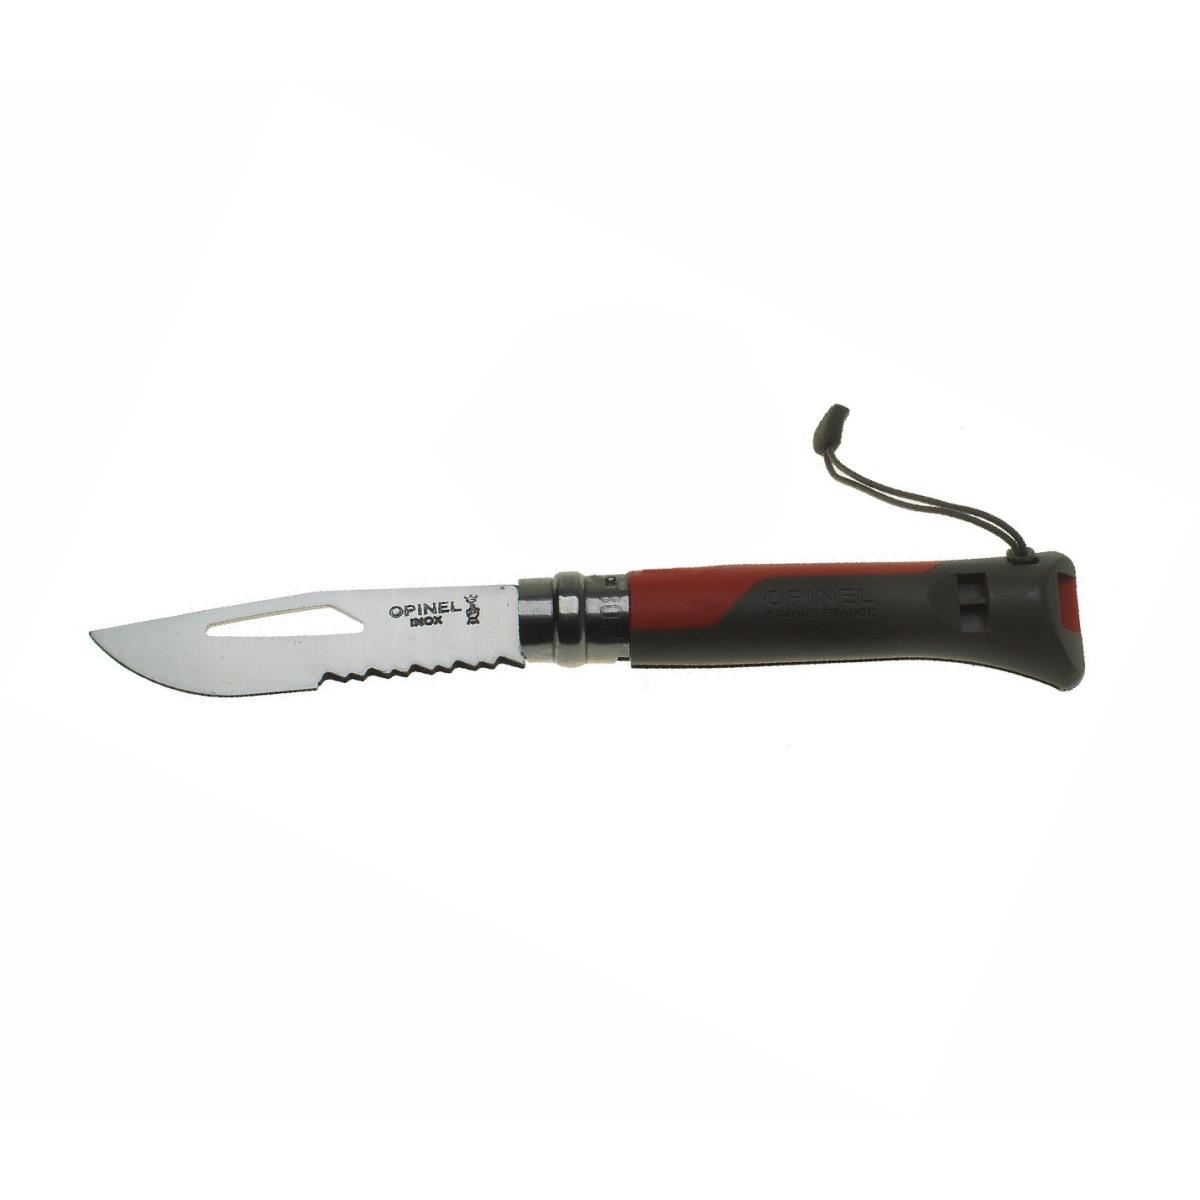 Нож Opinel 8 VRI Outdoor knife двухцветная пластик. рукоять (красная), свисток, вставка для темляка переплетчик office kit b2120n a4 перф 25л сшив макс 500л пластик пруж 4 5 51мм